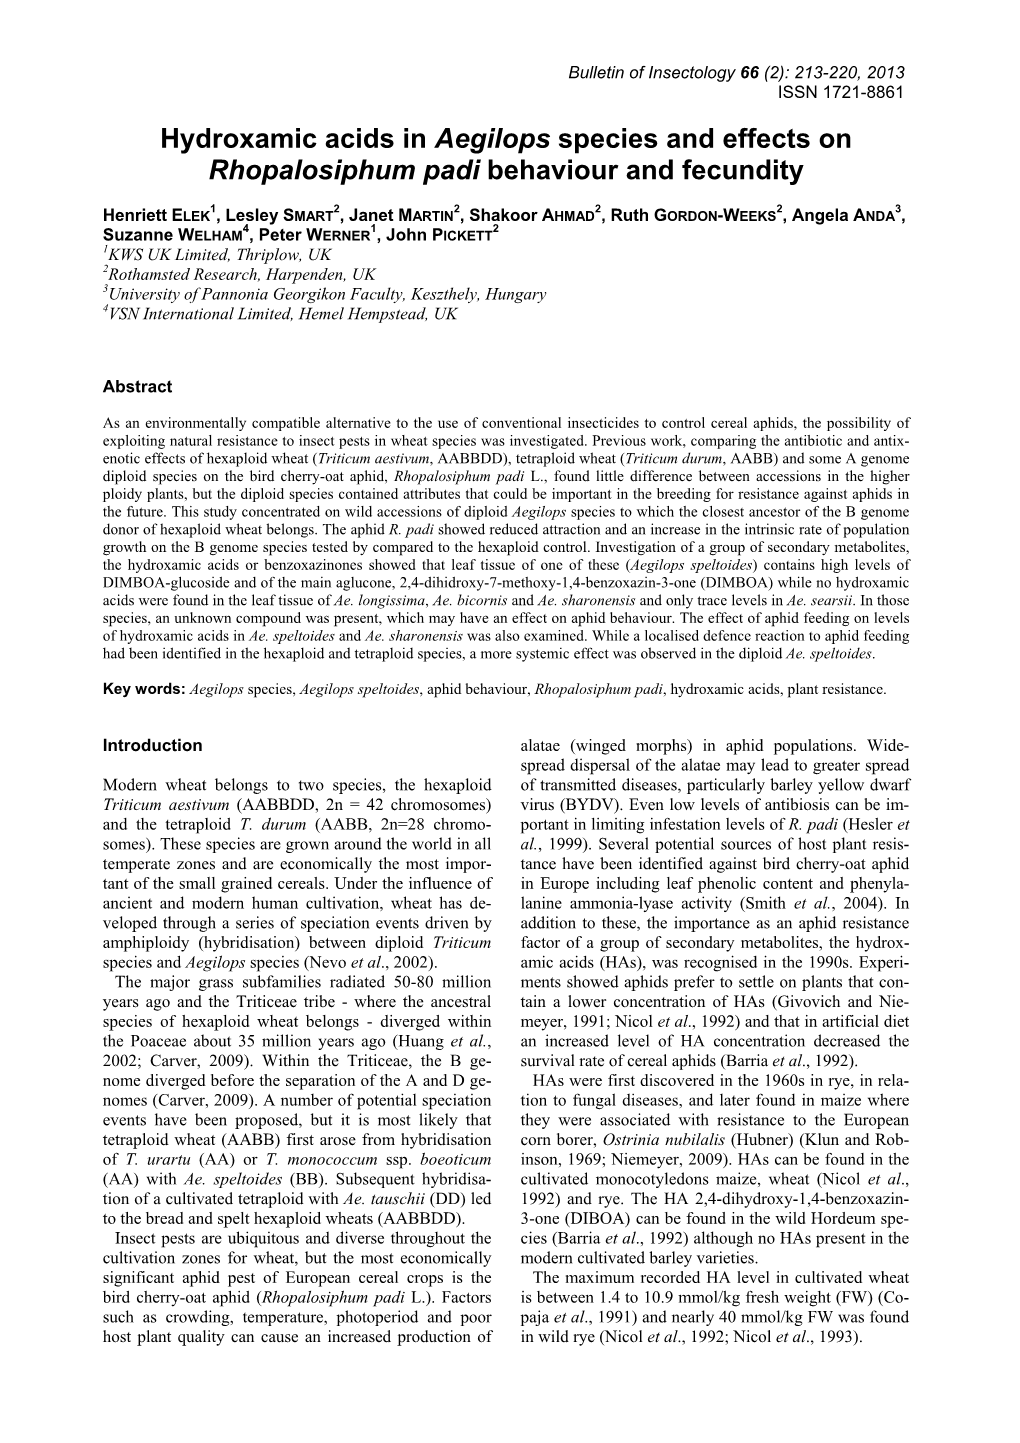 Hydroxamic Acids in Aegilops Species and Effects on Rhopalosiphum Padi Behaviour and Fecundity